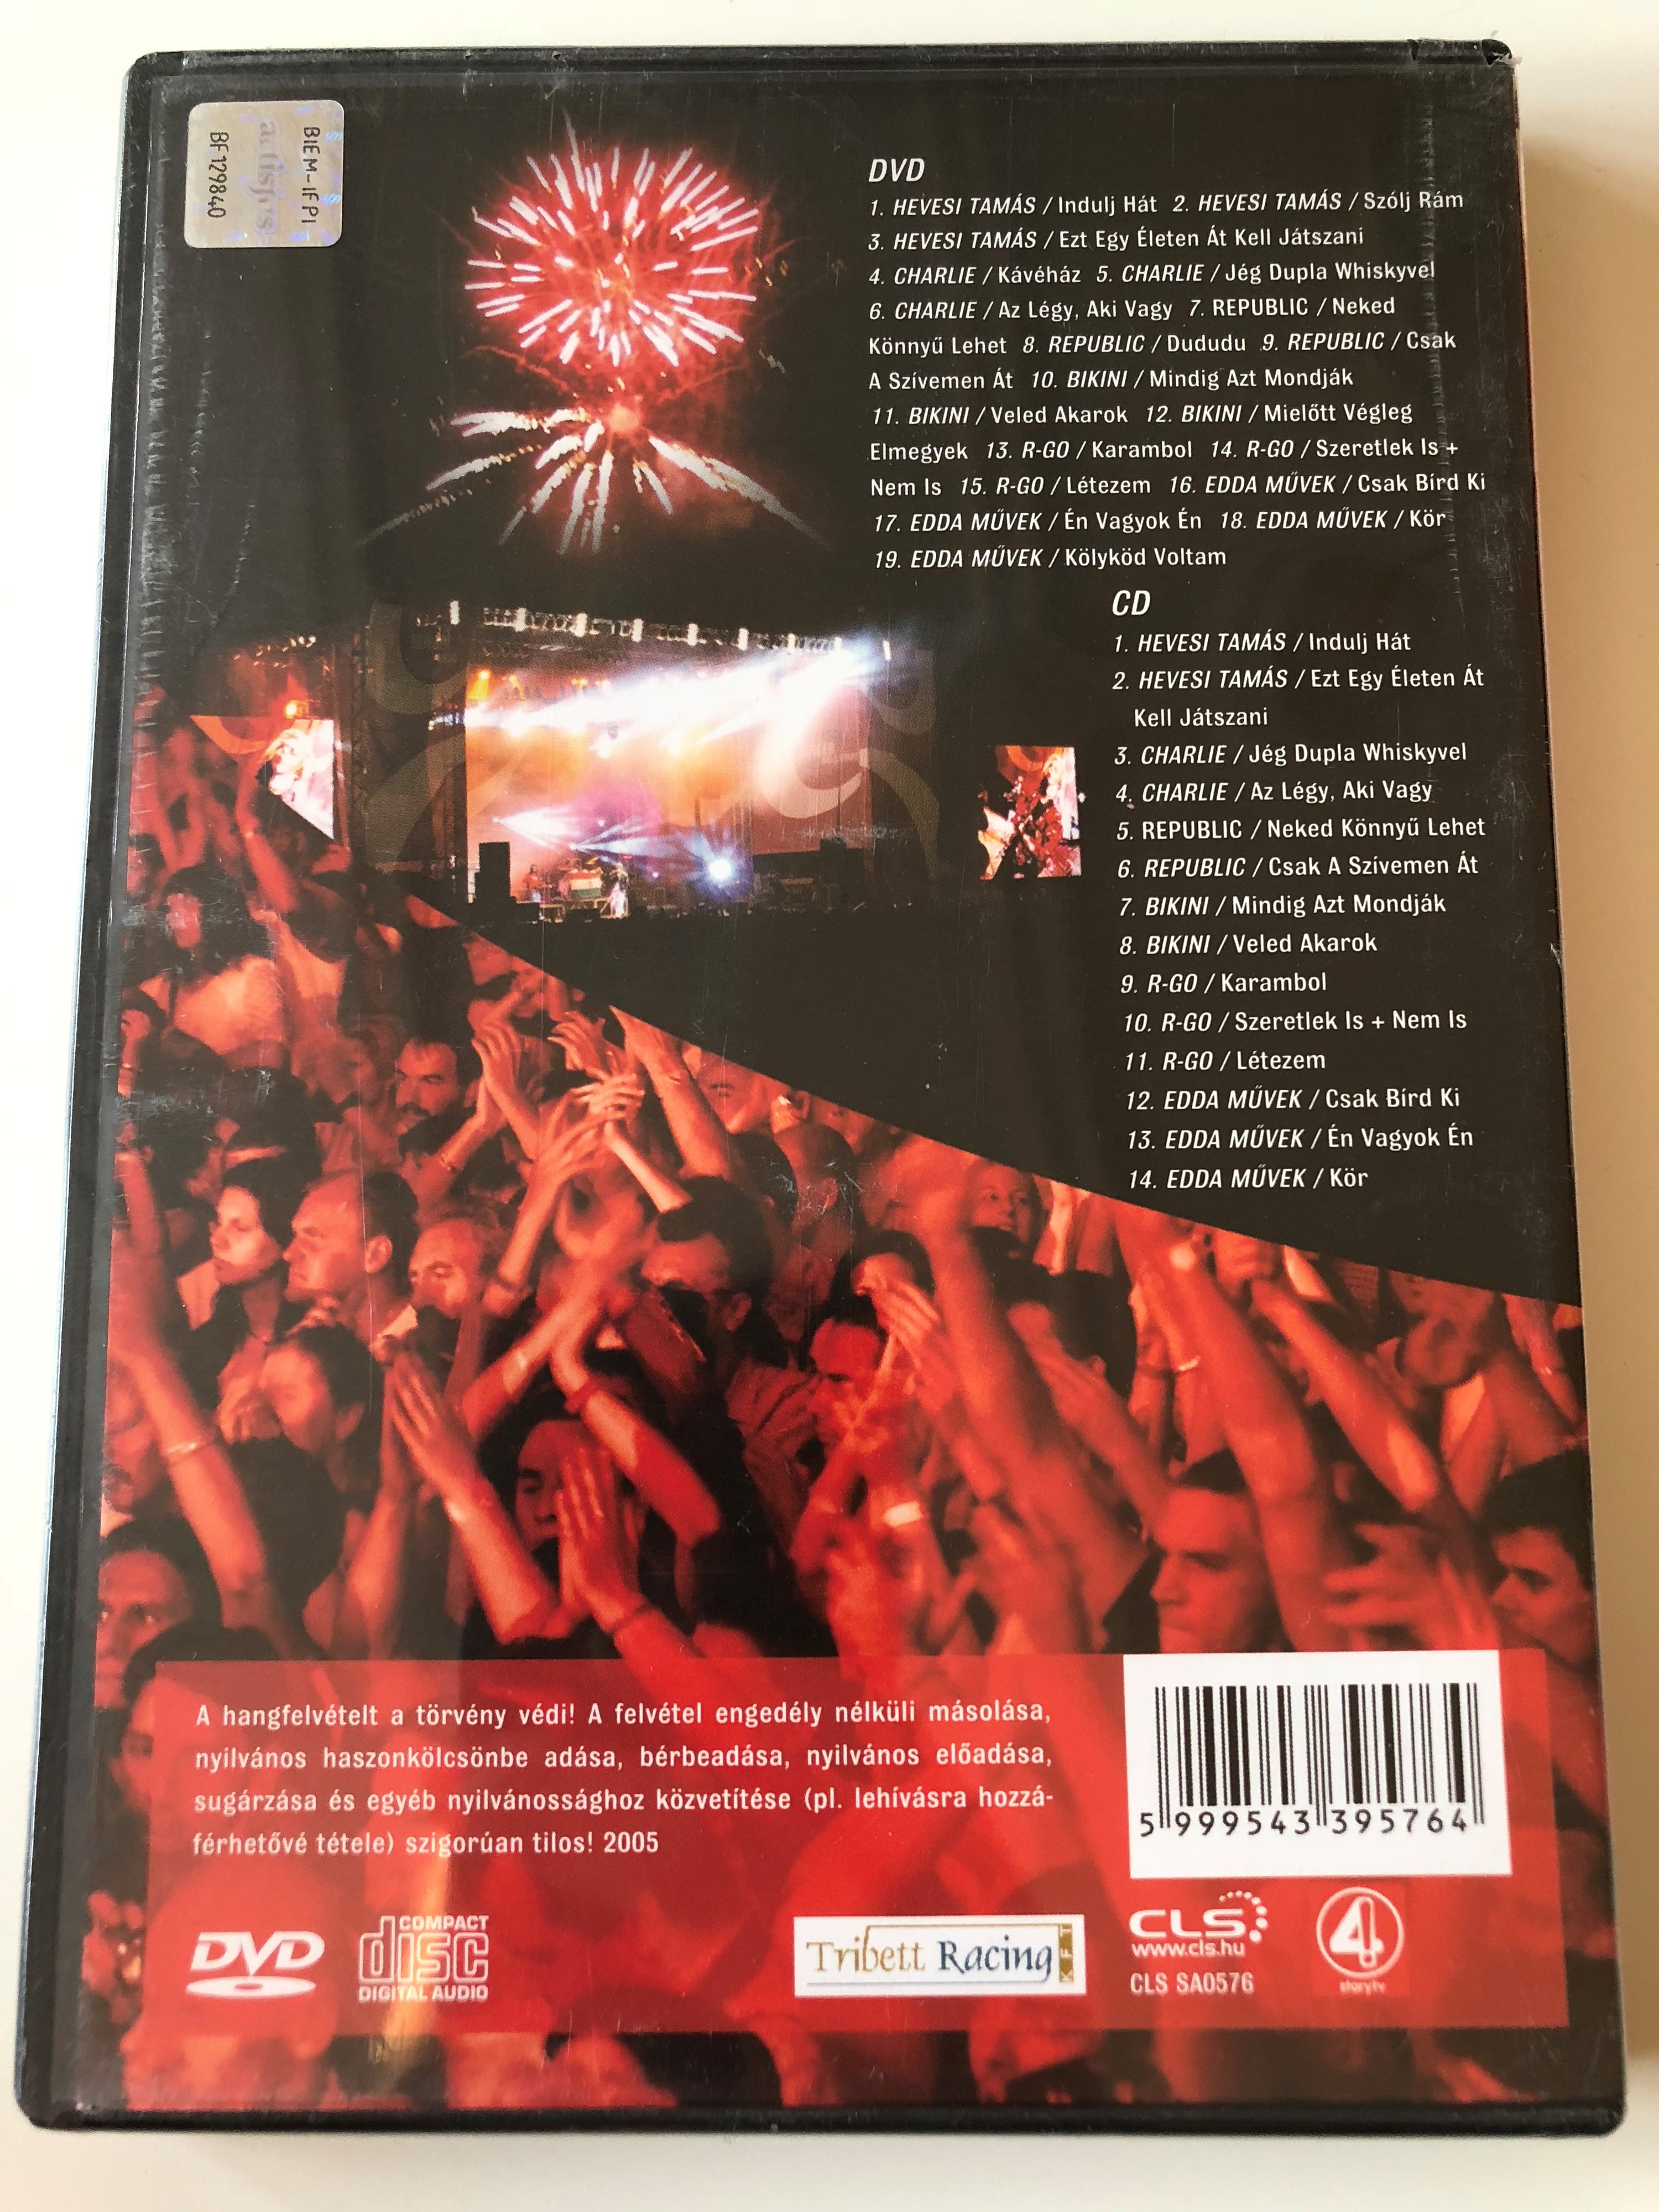 sl-ger-r-di-megaparty-dvd-cd-2005-hungarian-popular-music-anthology-live-concert-2-.jpg